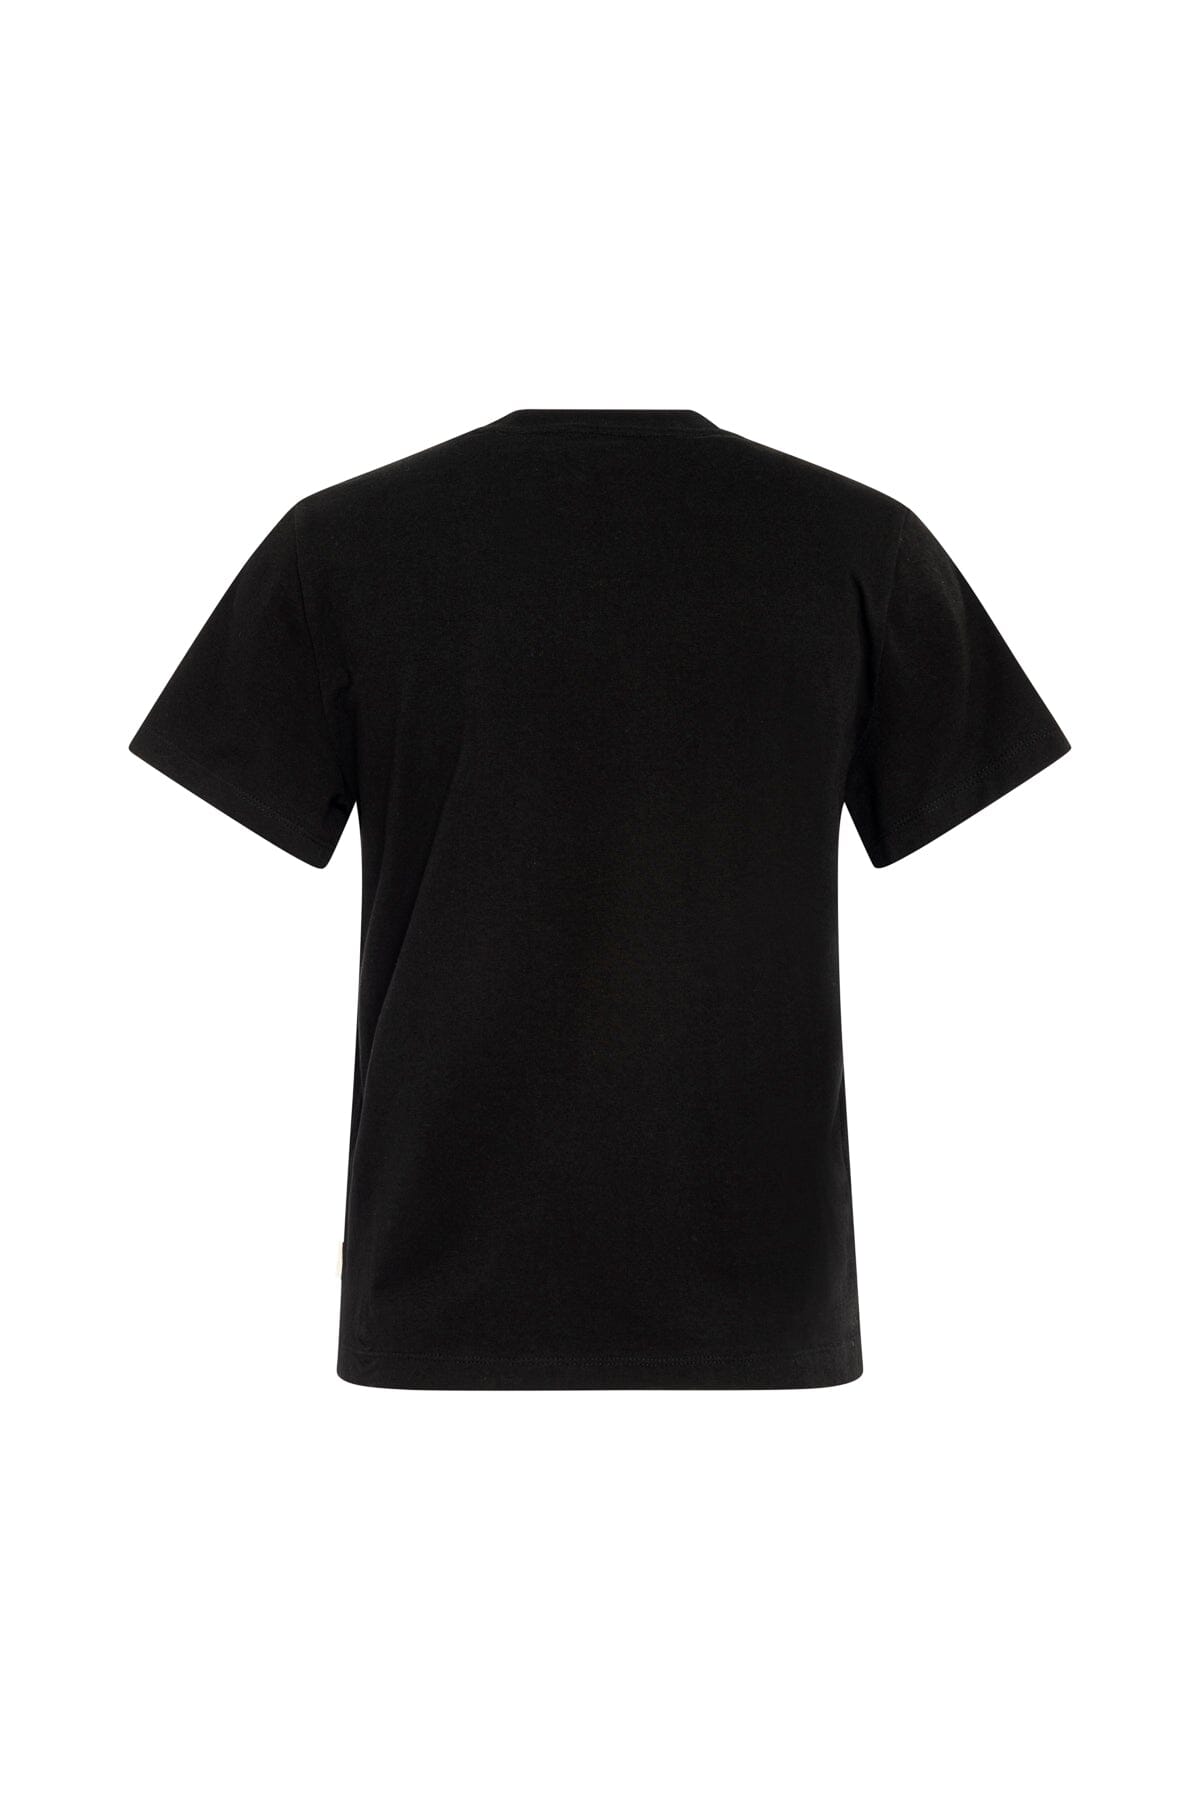 Paragon Olympia Black T-shirt